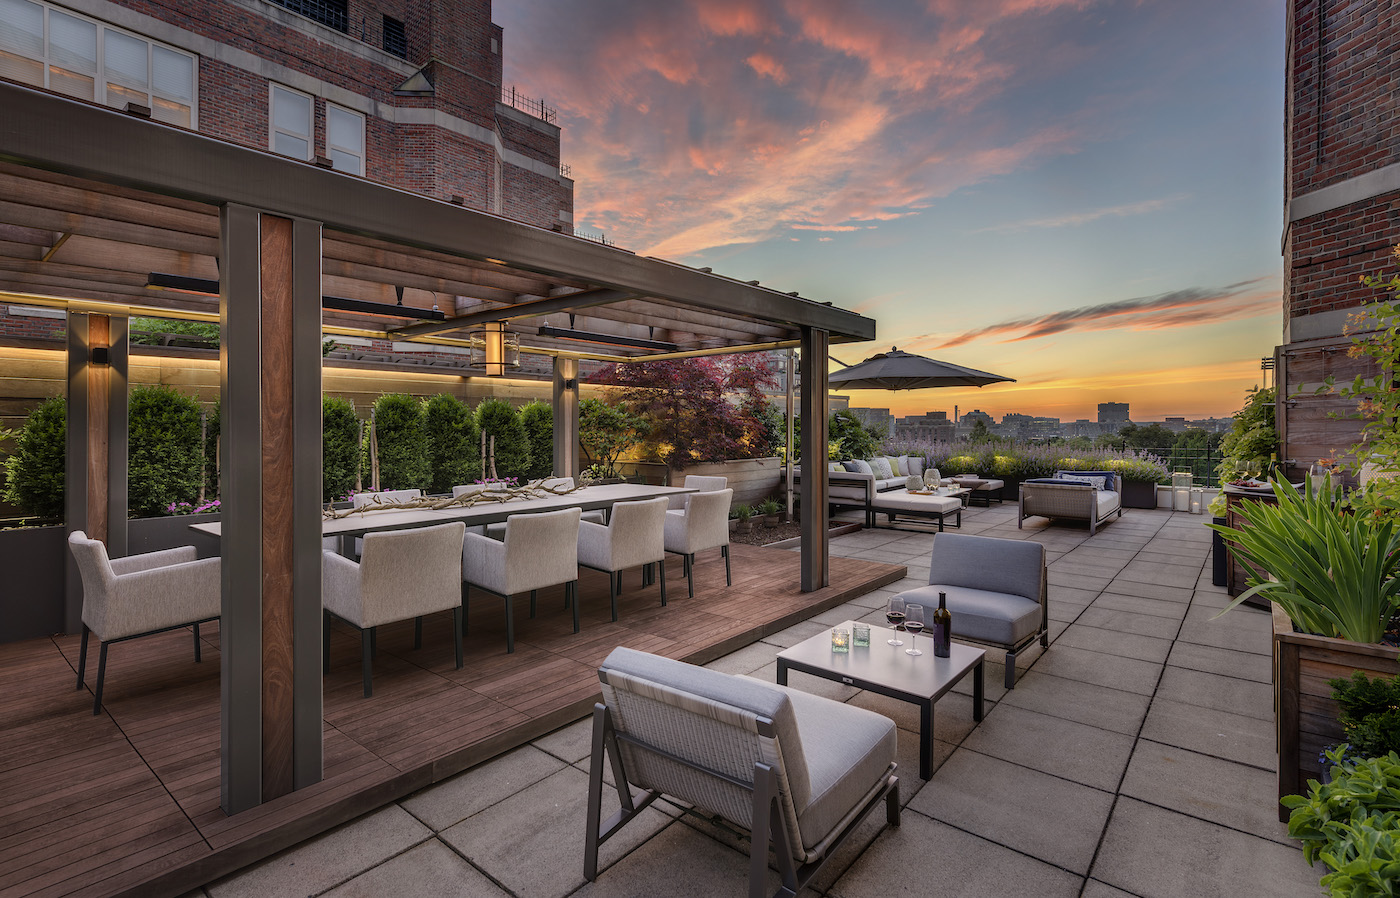 Zen Associates, Al Fresco Dining, Outdoor Living Spaces, Landscape Design, Boston